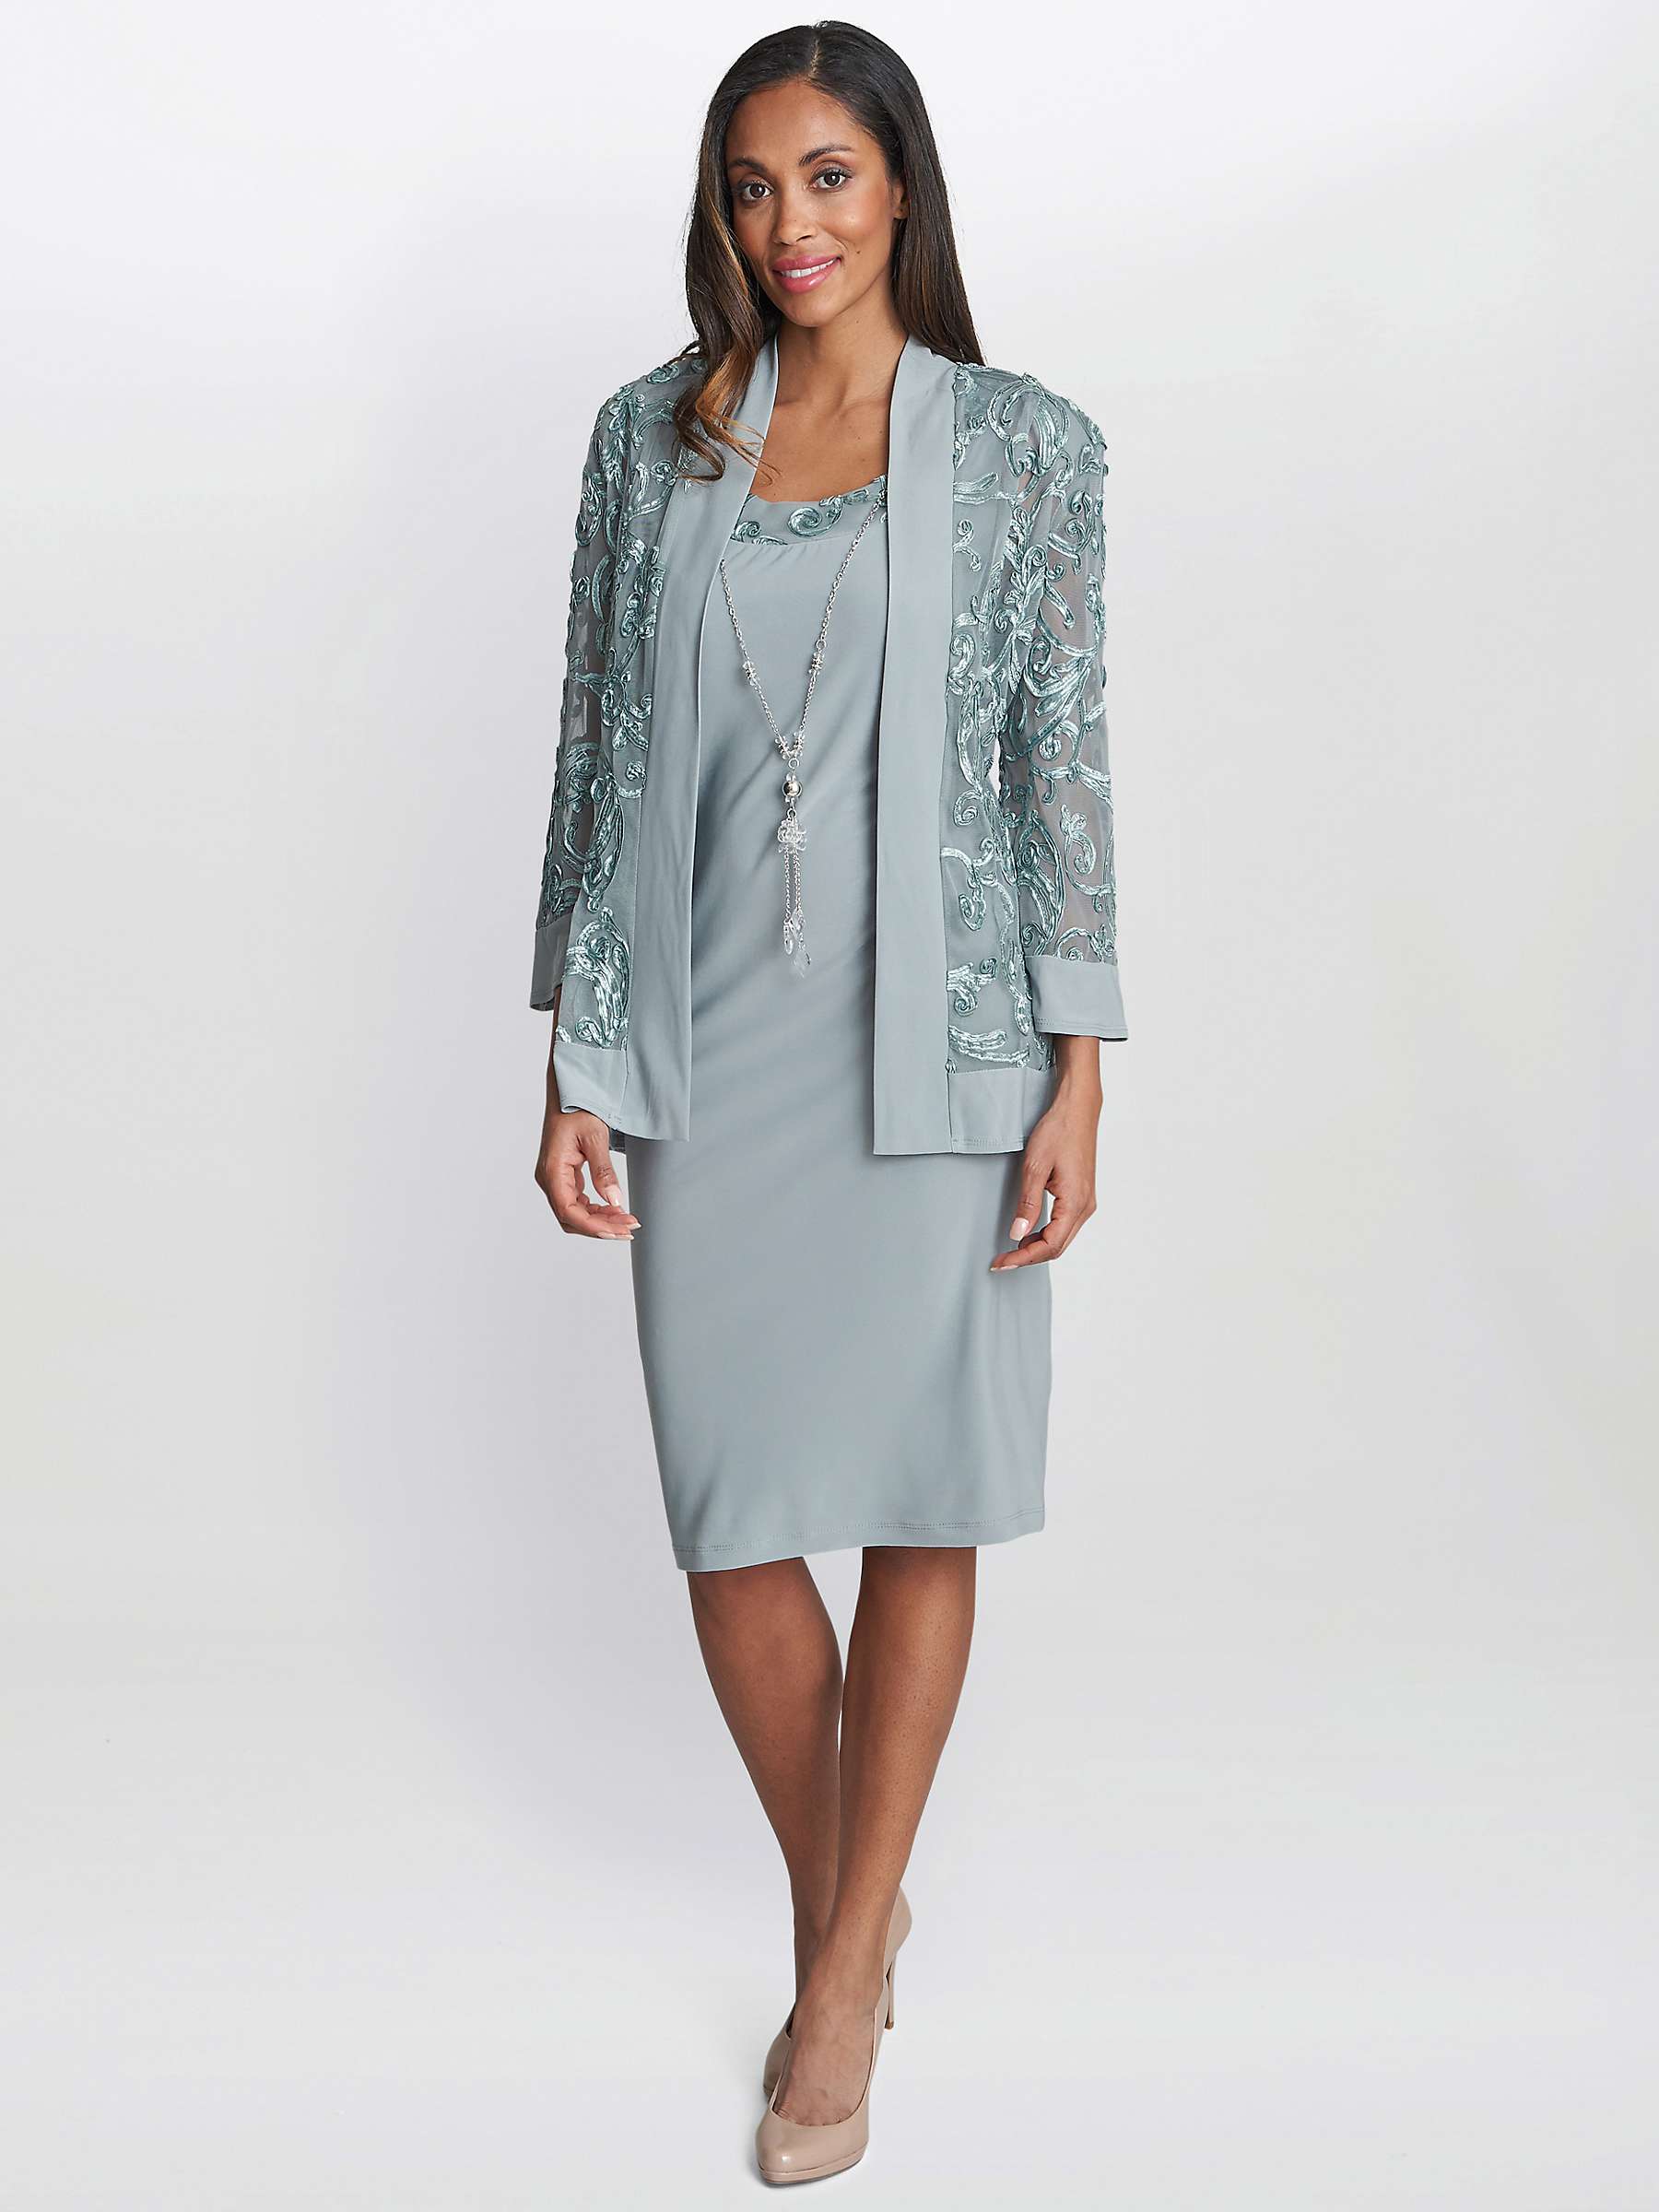 Buy Gina Bacconi Beverley Dress and Jacket Set Online at johnlewis.com